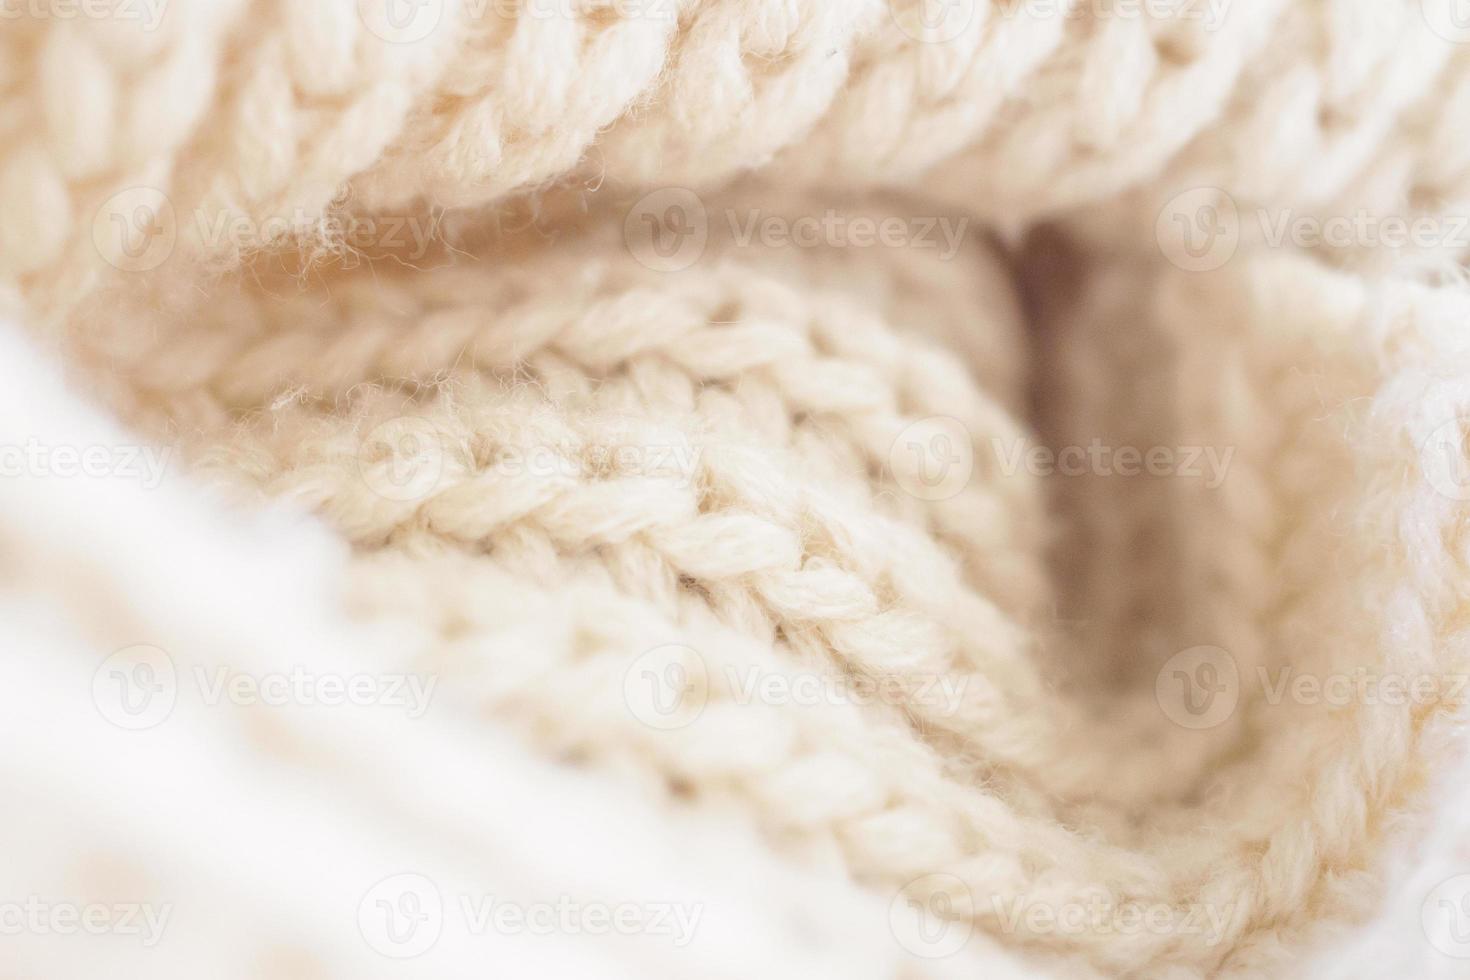 closeup beige knitted woolen fabric texture background photo